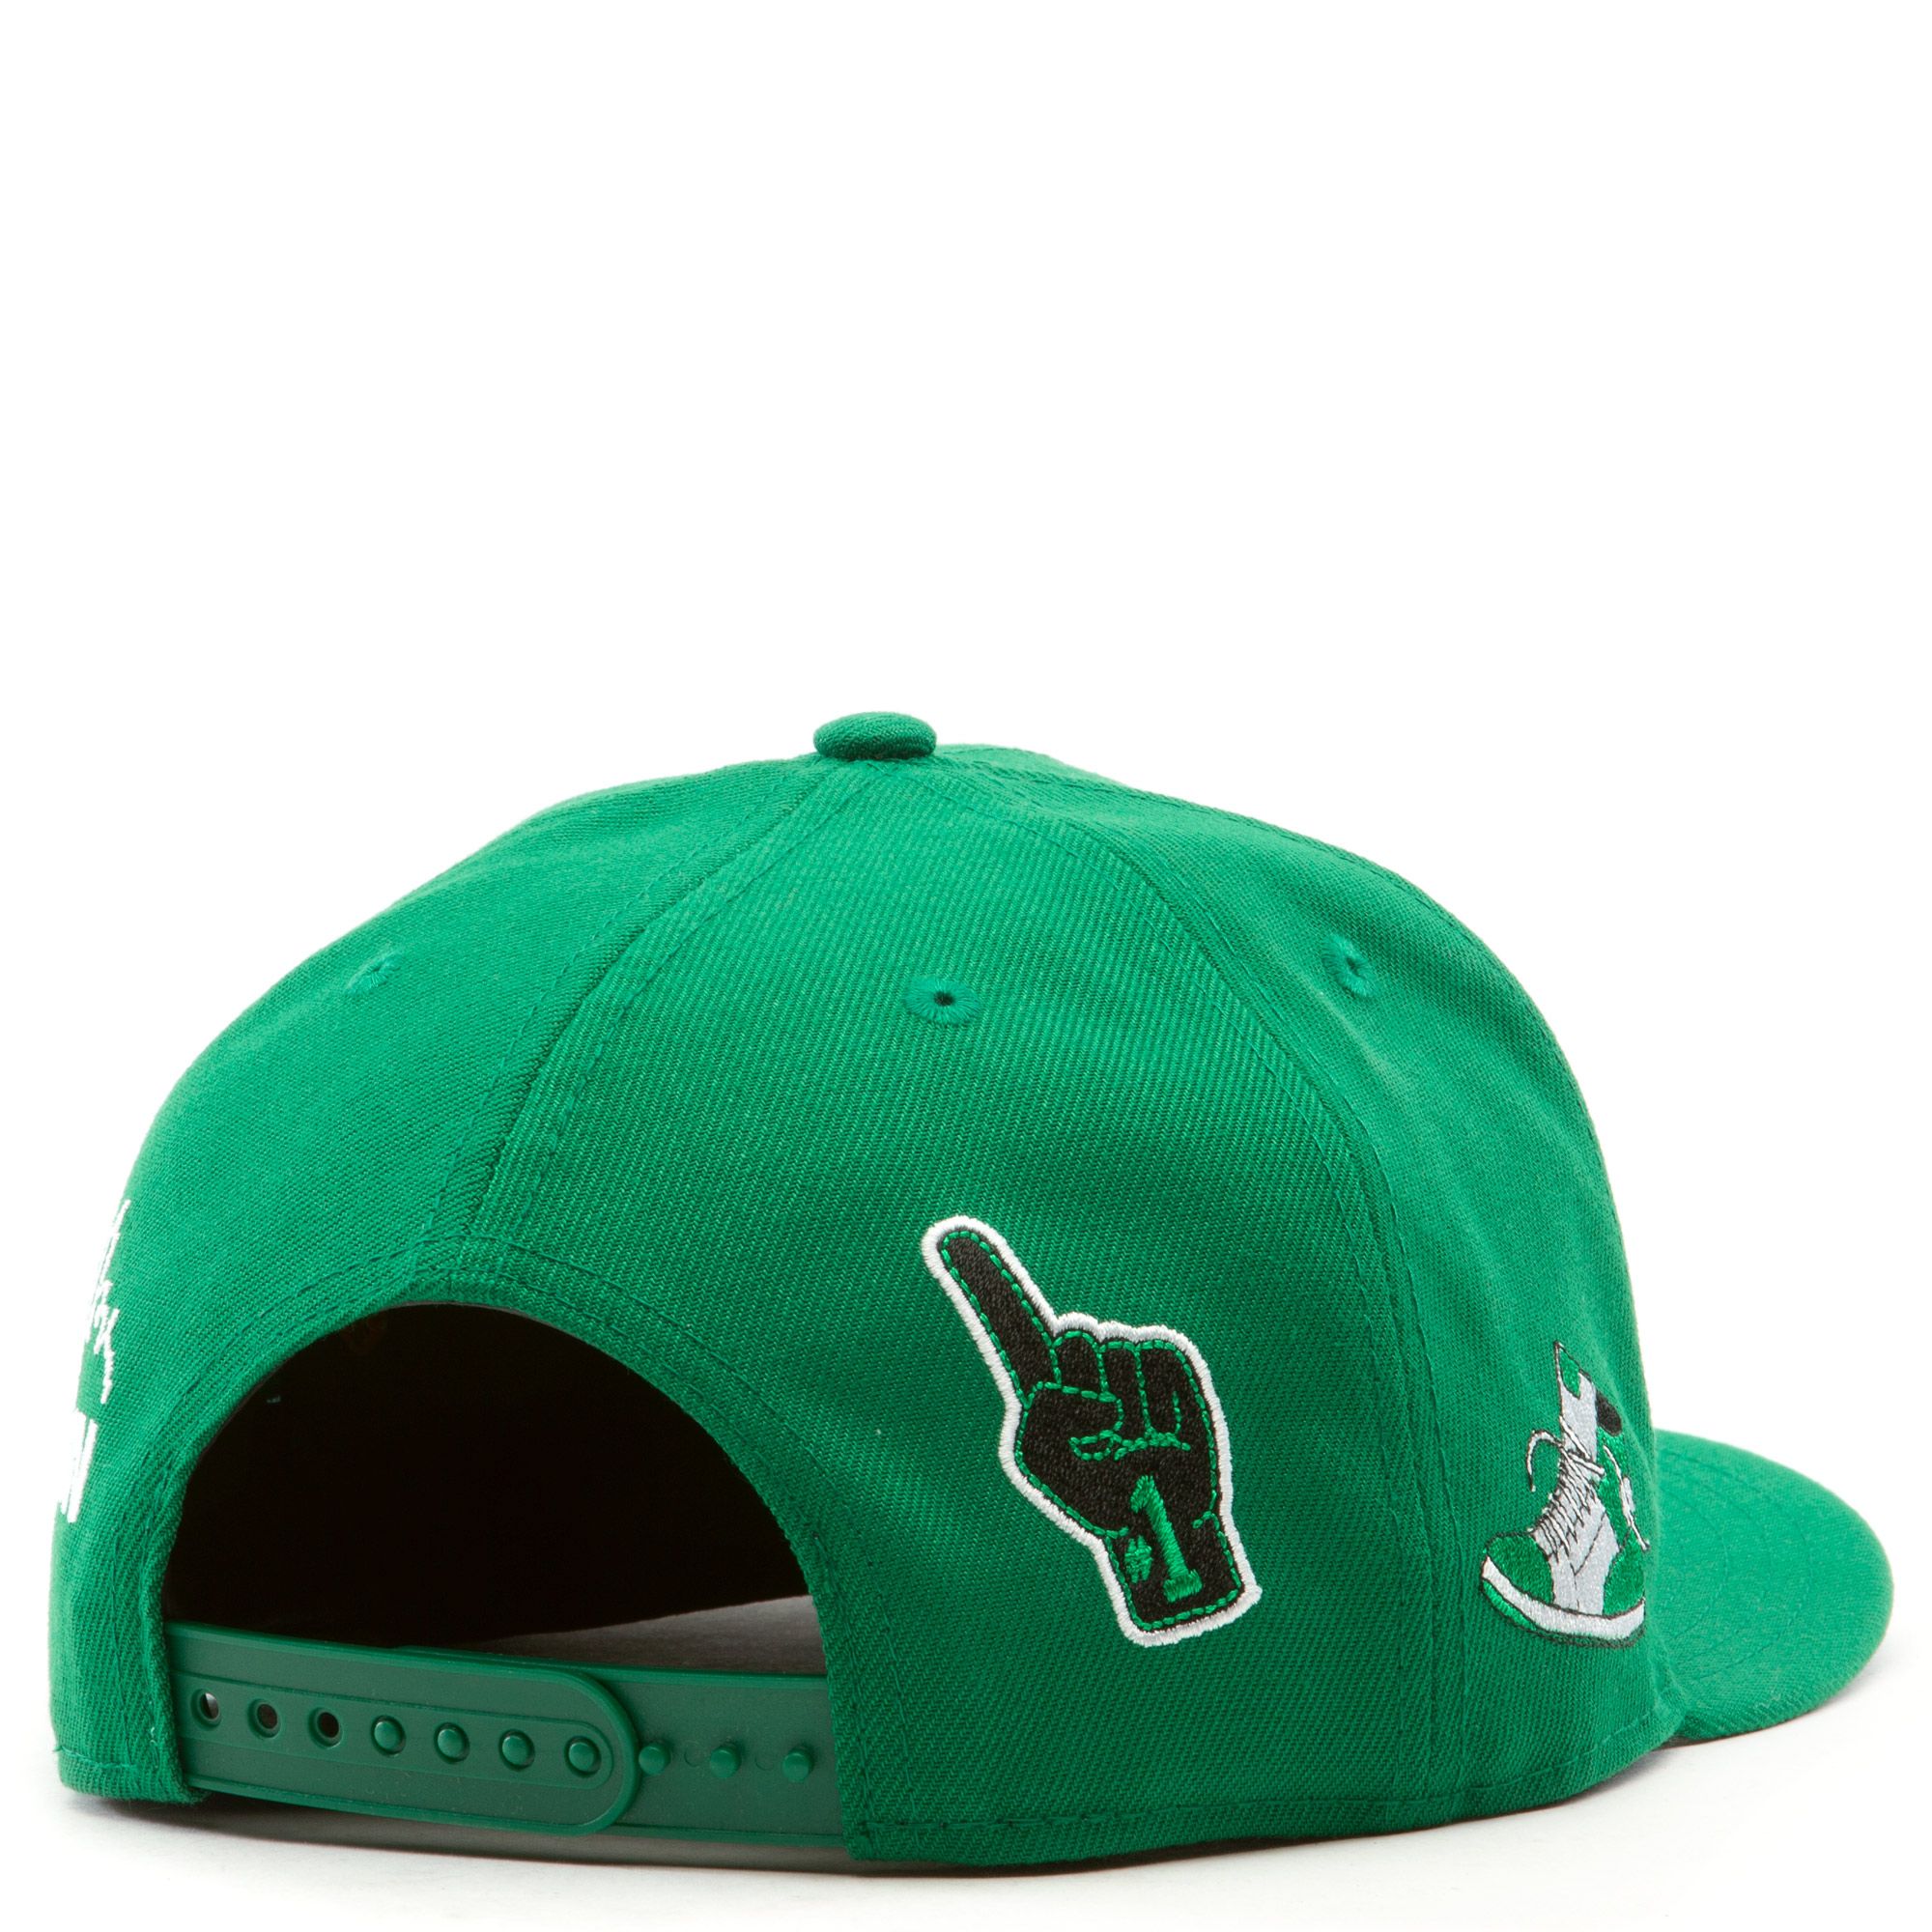 NBA Boston Celtics Maine Celtics Red Claws SnapBack Hat Cap OSFM (A5)